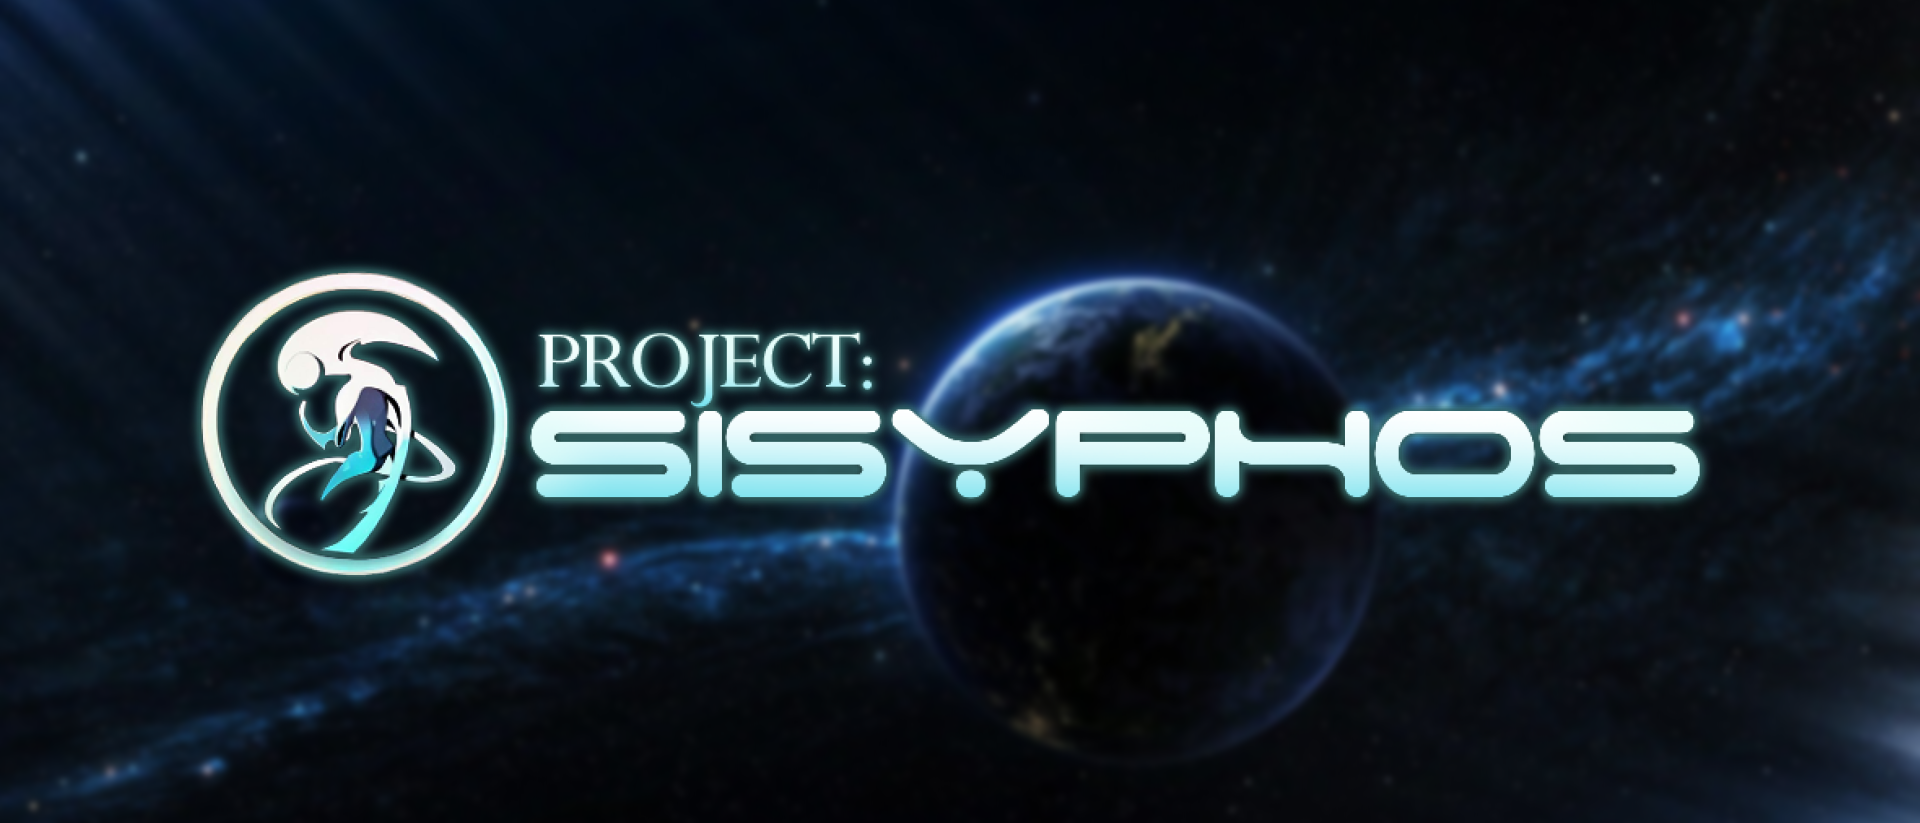 Project: Sisyphos